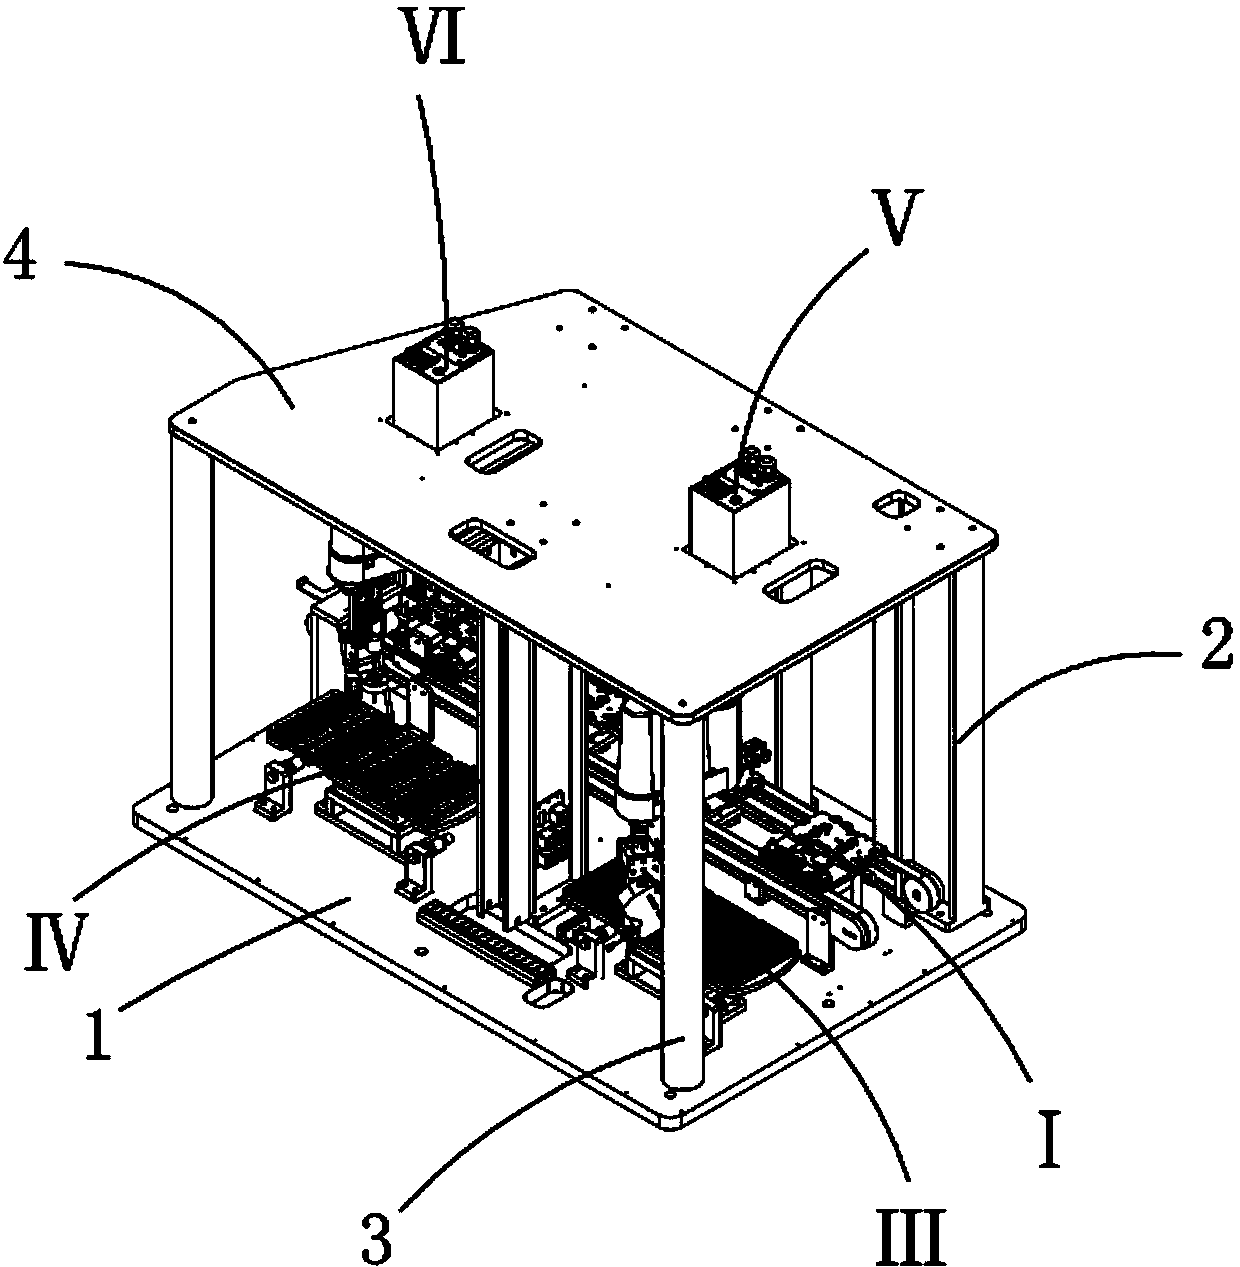 Full-automatic gasket assembler